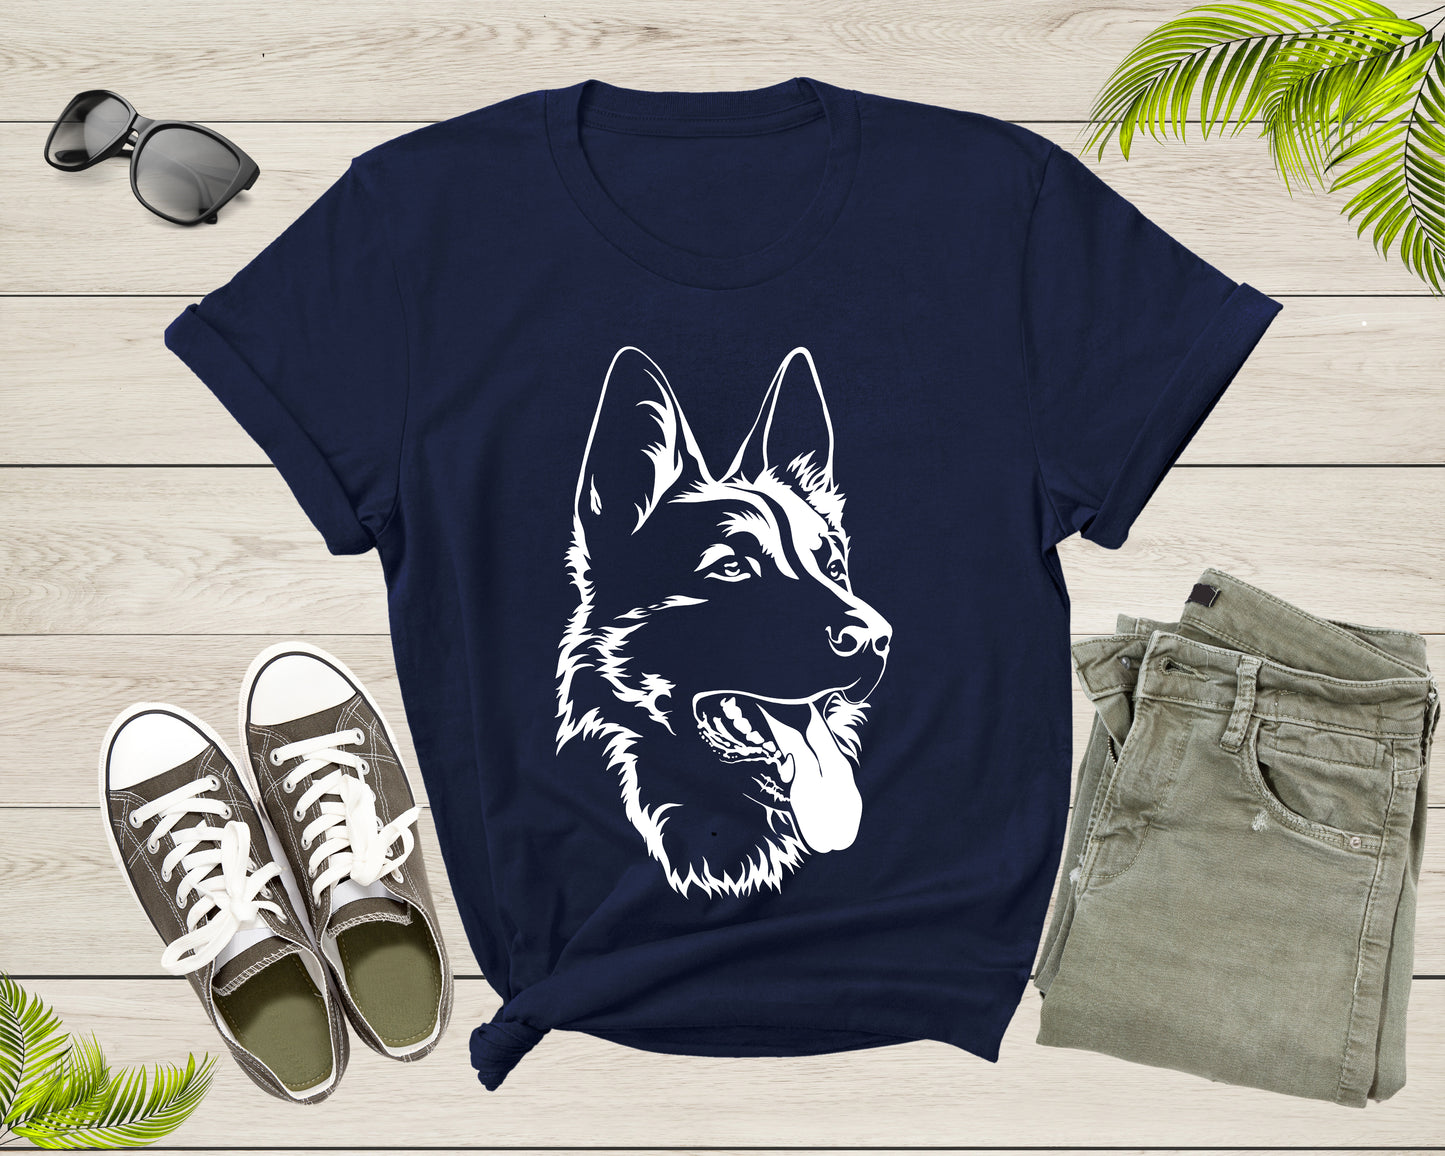 Cute Black German Shepherd Dog Puppy Pet Doggie Animal Dog T-Shirt Dog Lover Gift T Shirt for Men Women Kids Boys Girls Dog Graphic TShirt